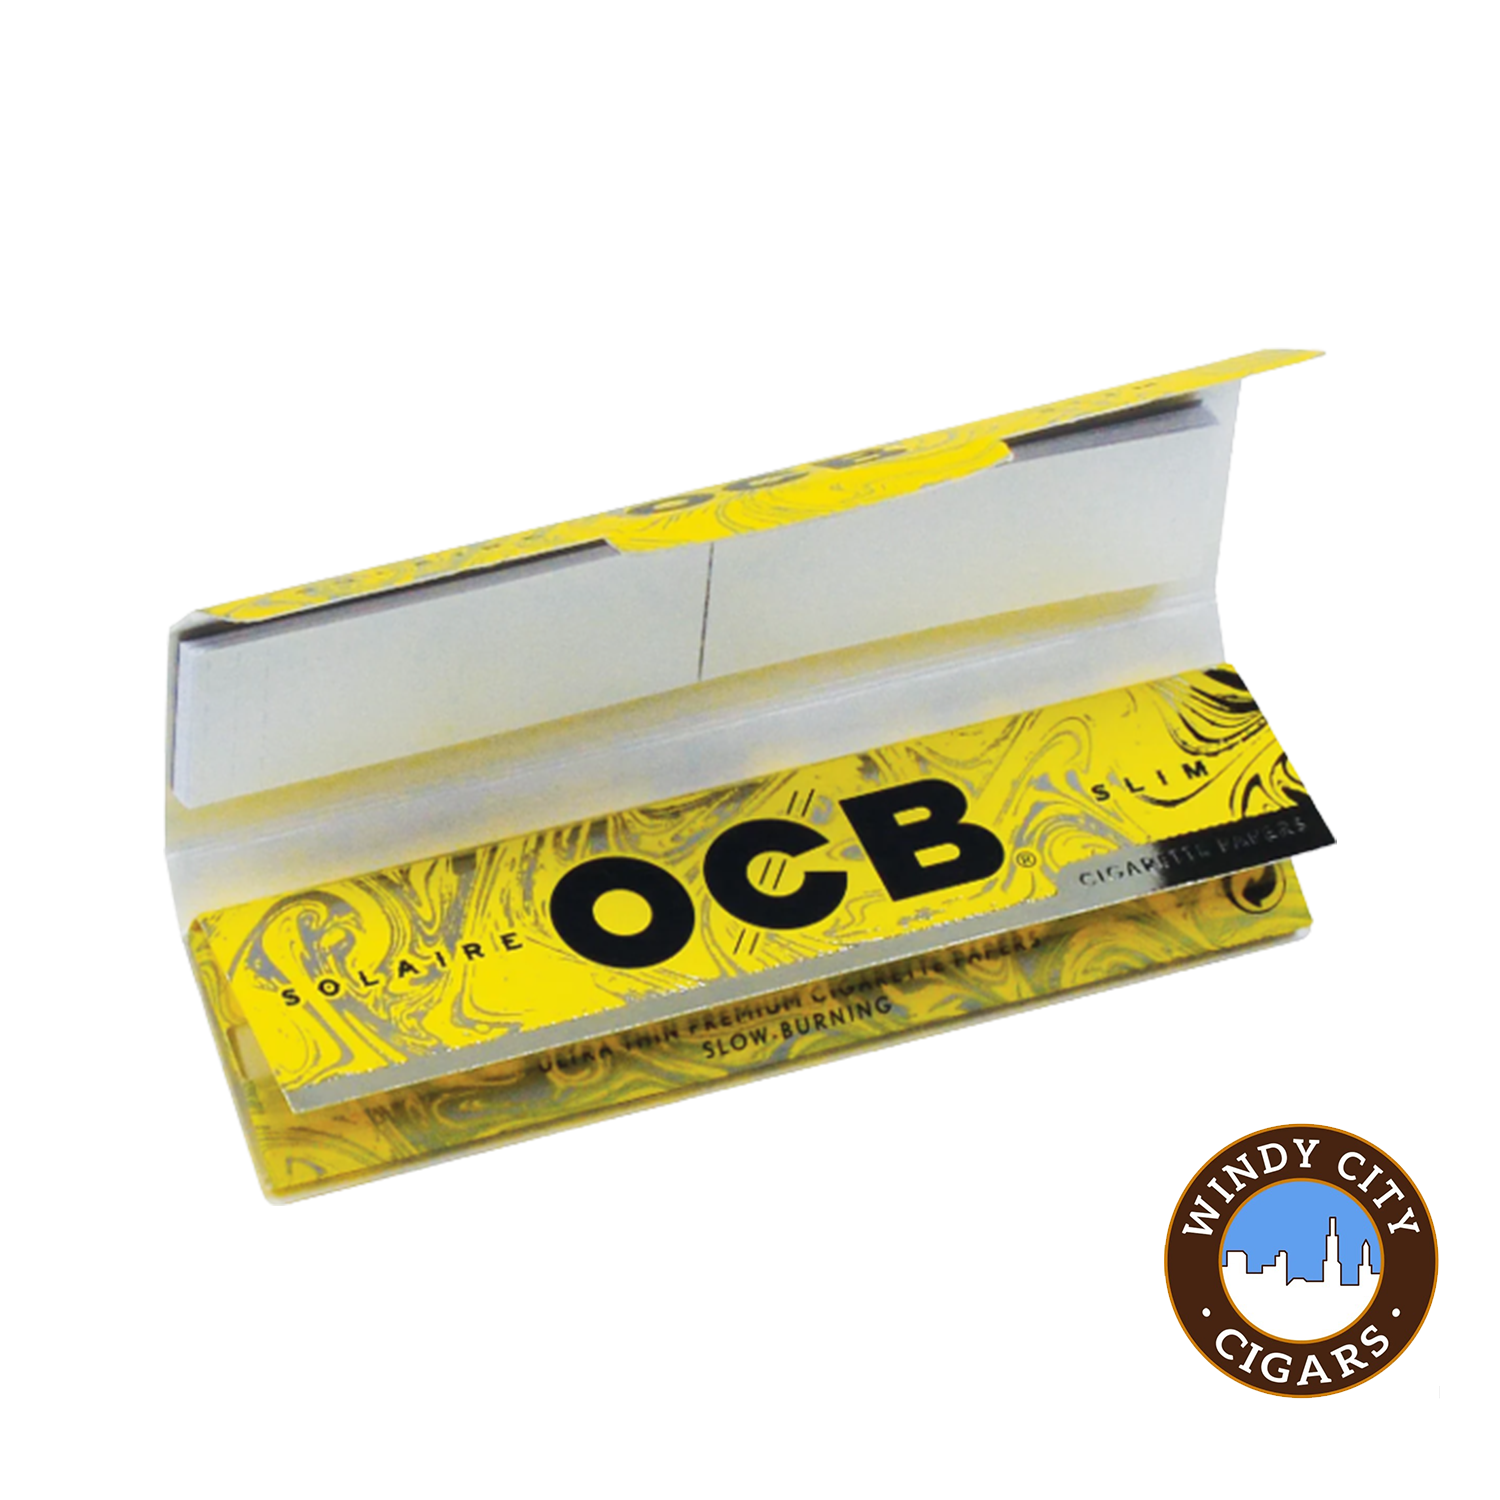 OCB Menthol paper tubes